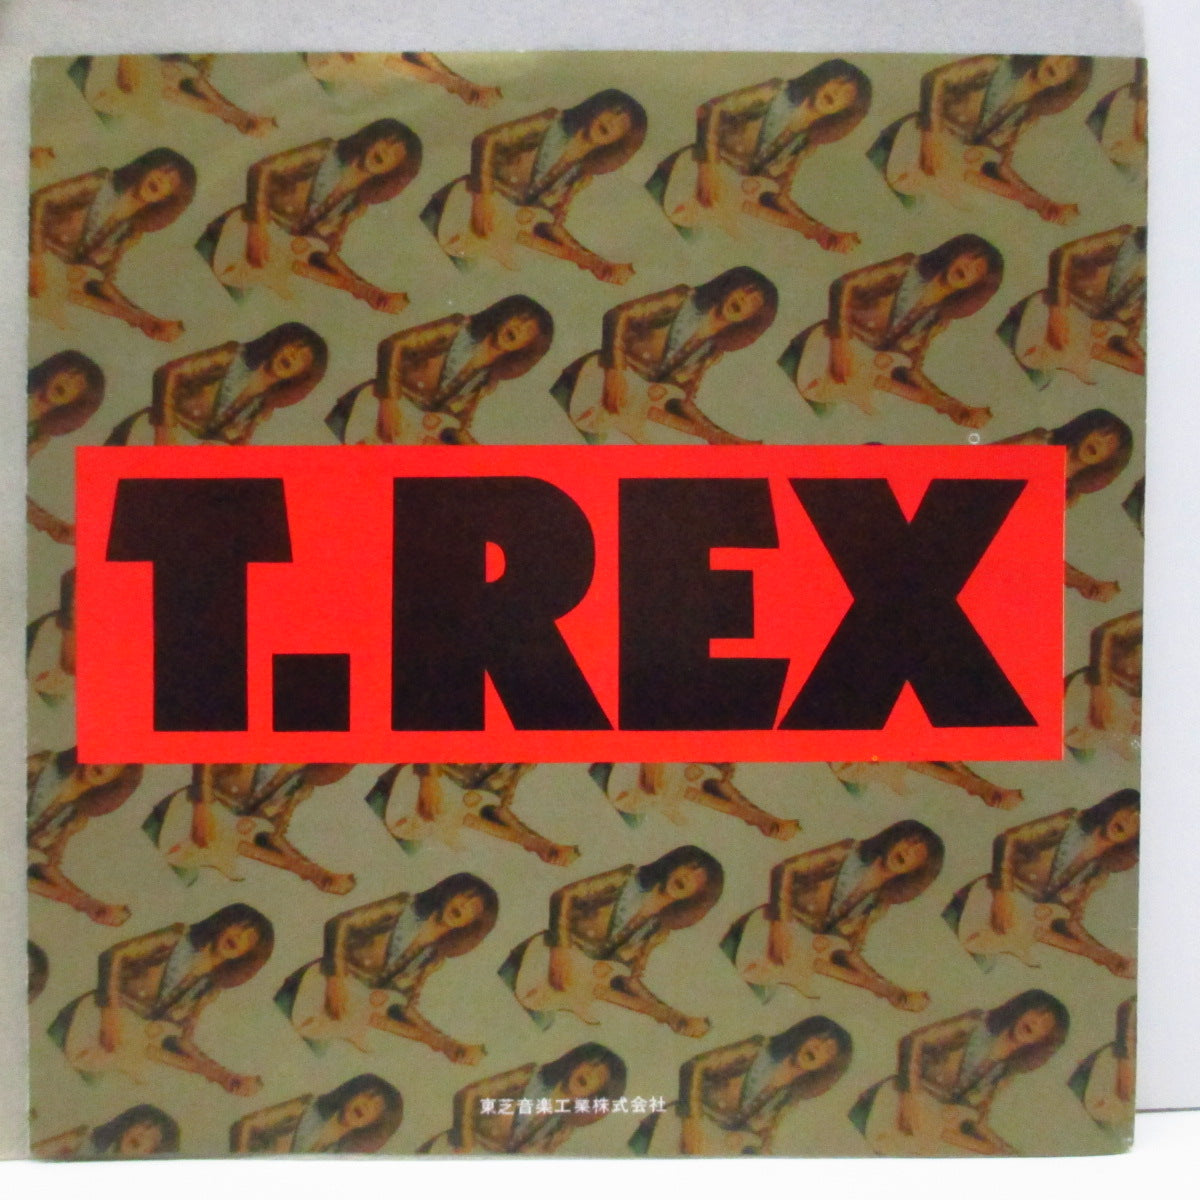 T.REX (Ｔ・レックス) - Children Of The Revolution (Japan オリジナル 7/EOR-10200)